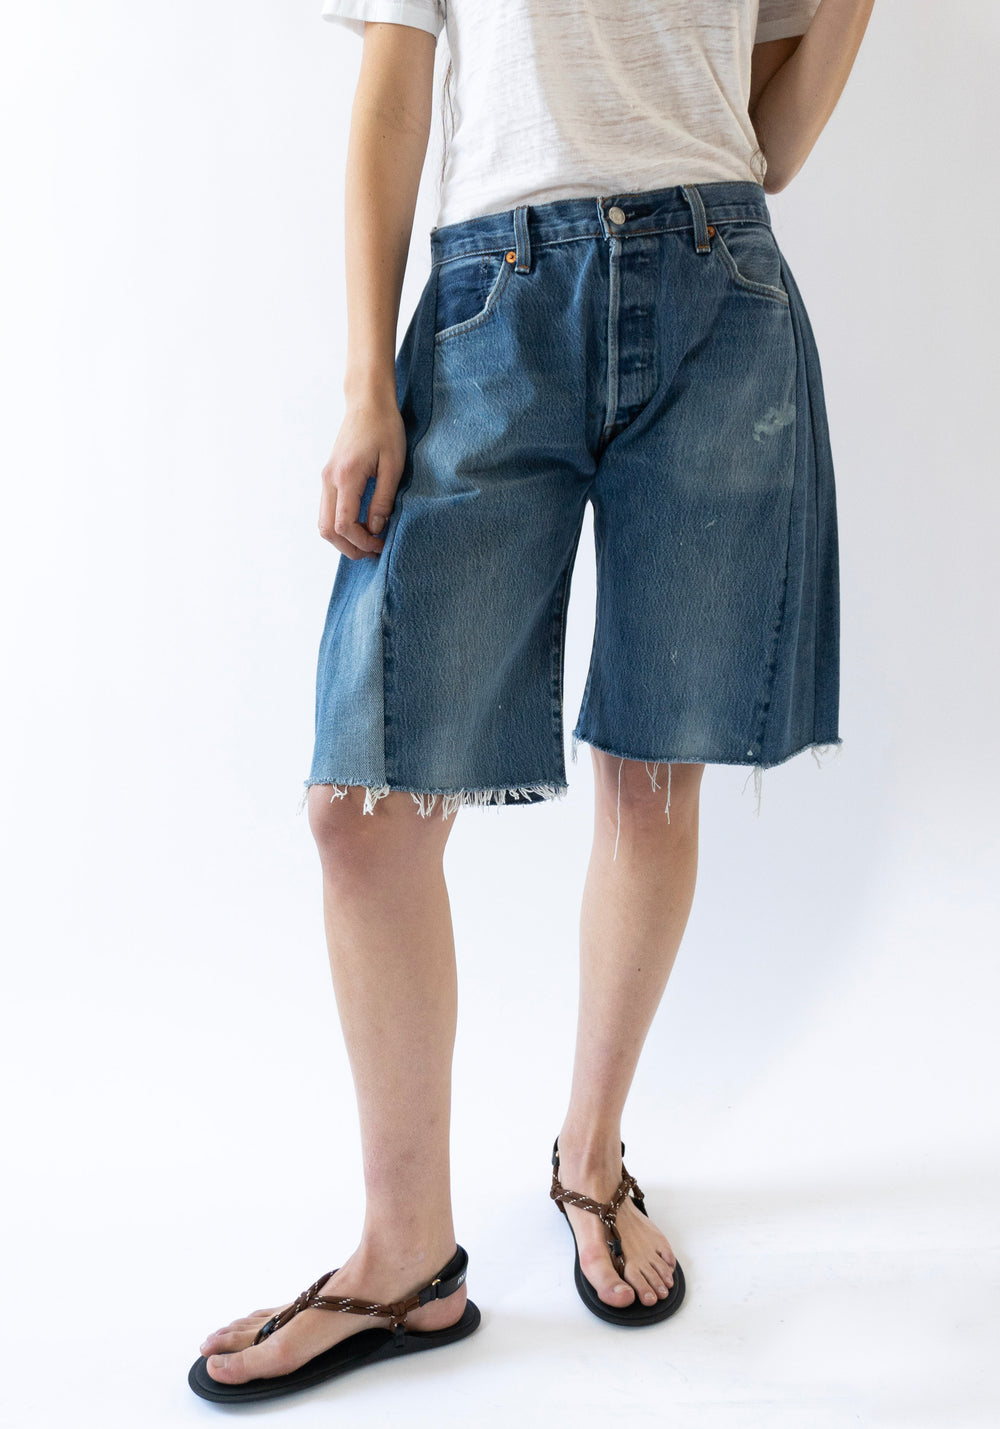 B Sides Vintage Lasso Jean Shorts in Indigo